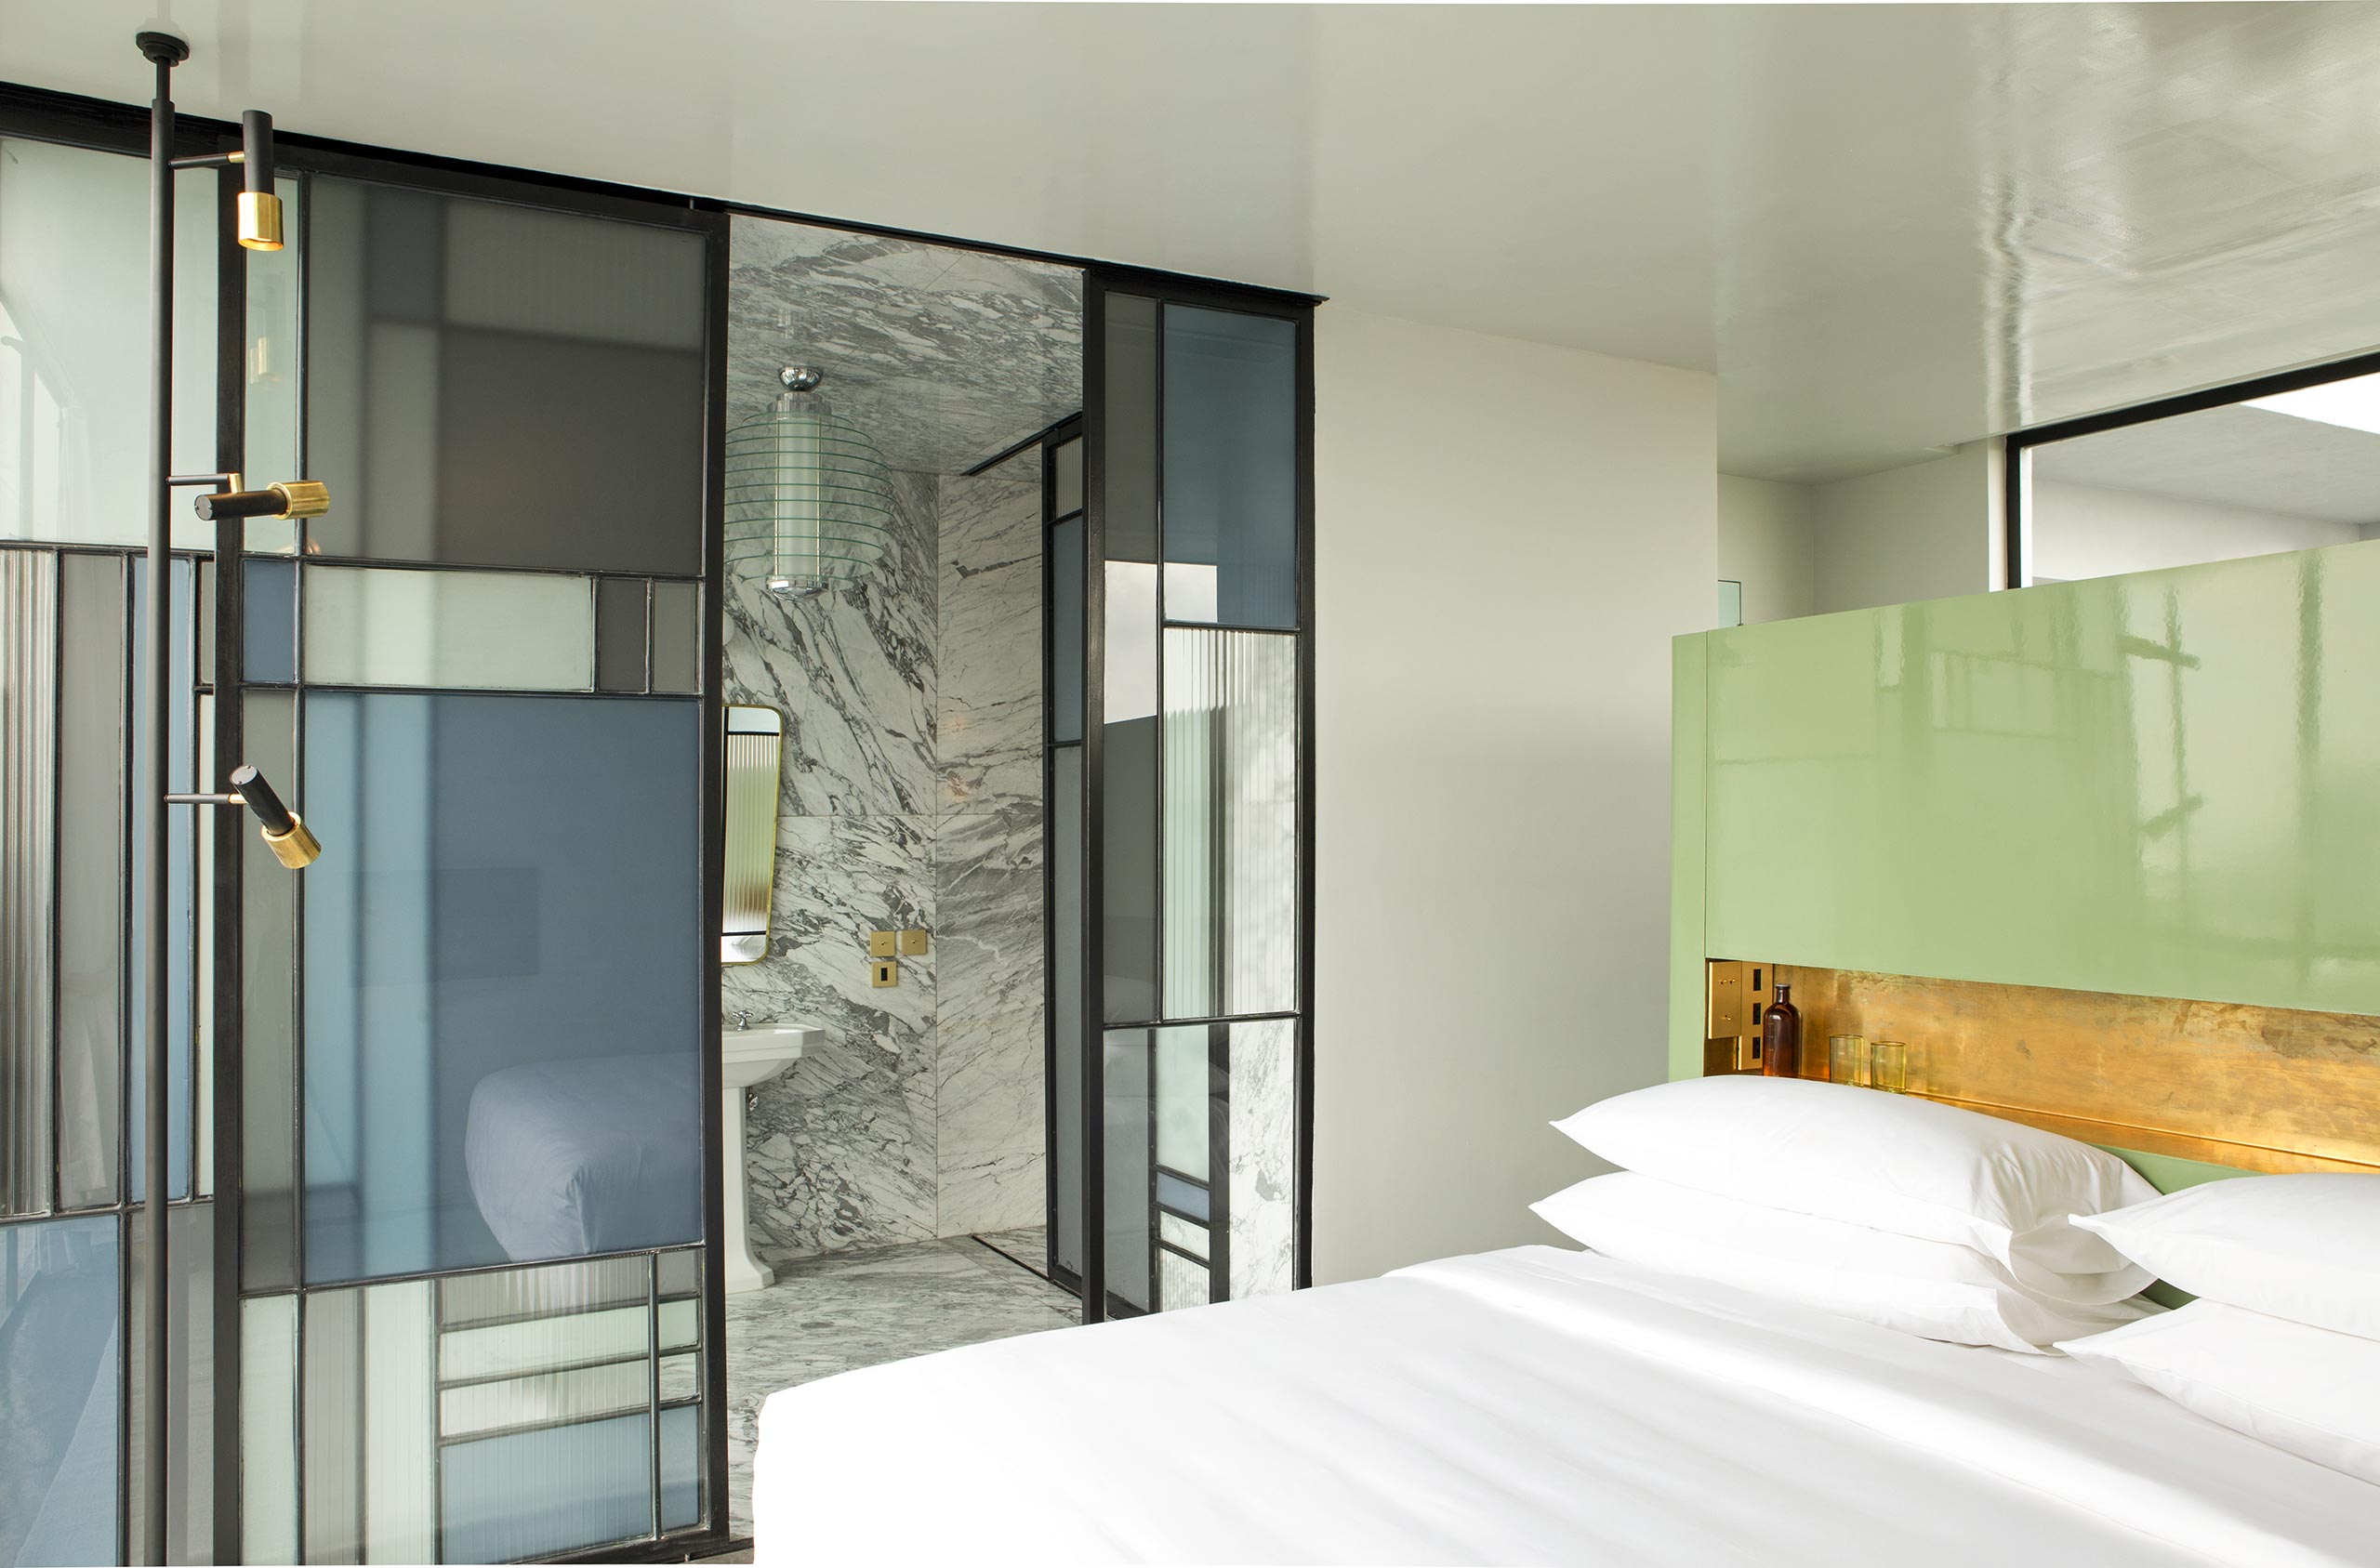 Casa Fayette by DIMORESTUDIO (Britt Moran &amp; Emiliano Salci) in Guadalajara, Mexico.
Member of Design Hotels™.  